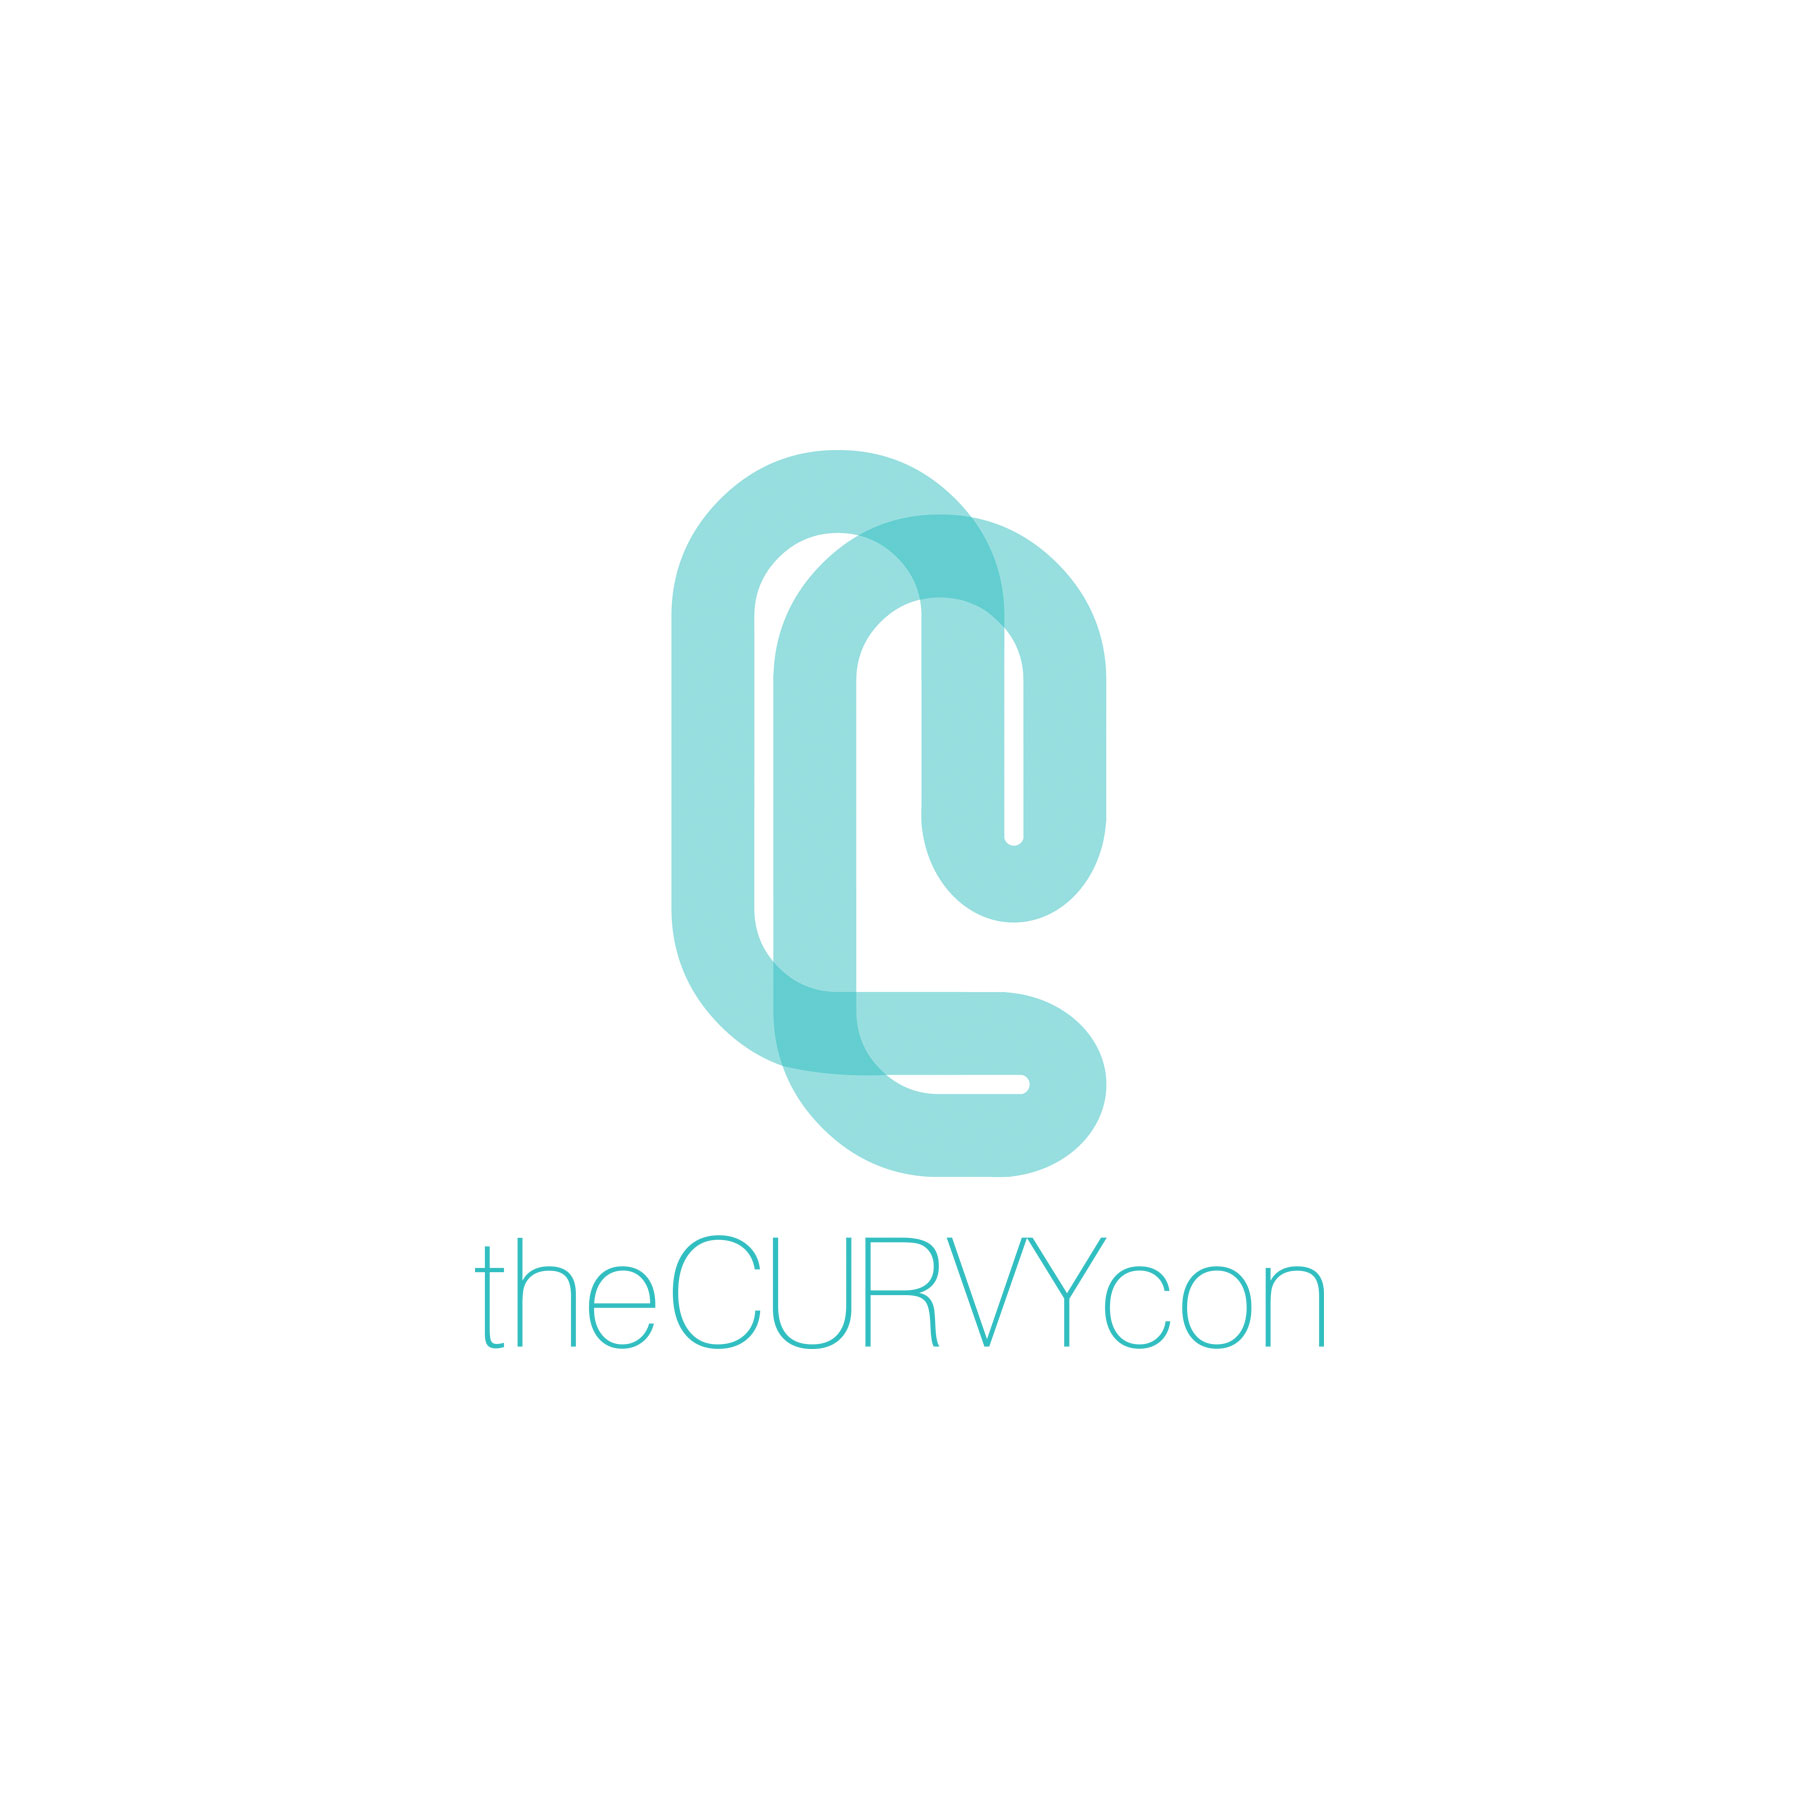 theCURVYcon logo